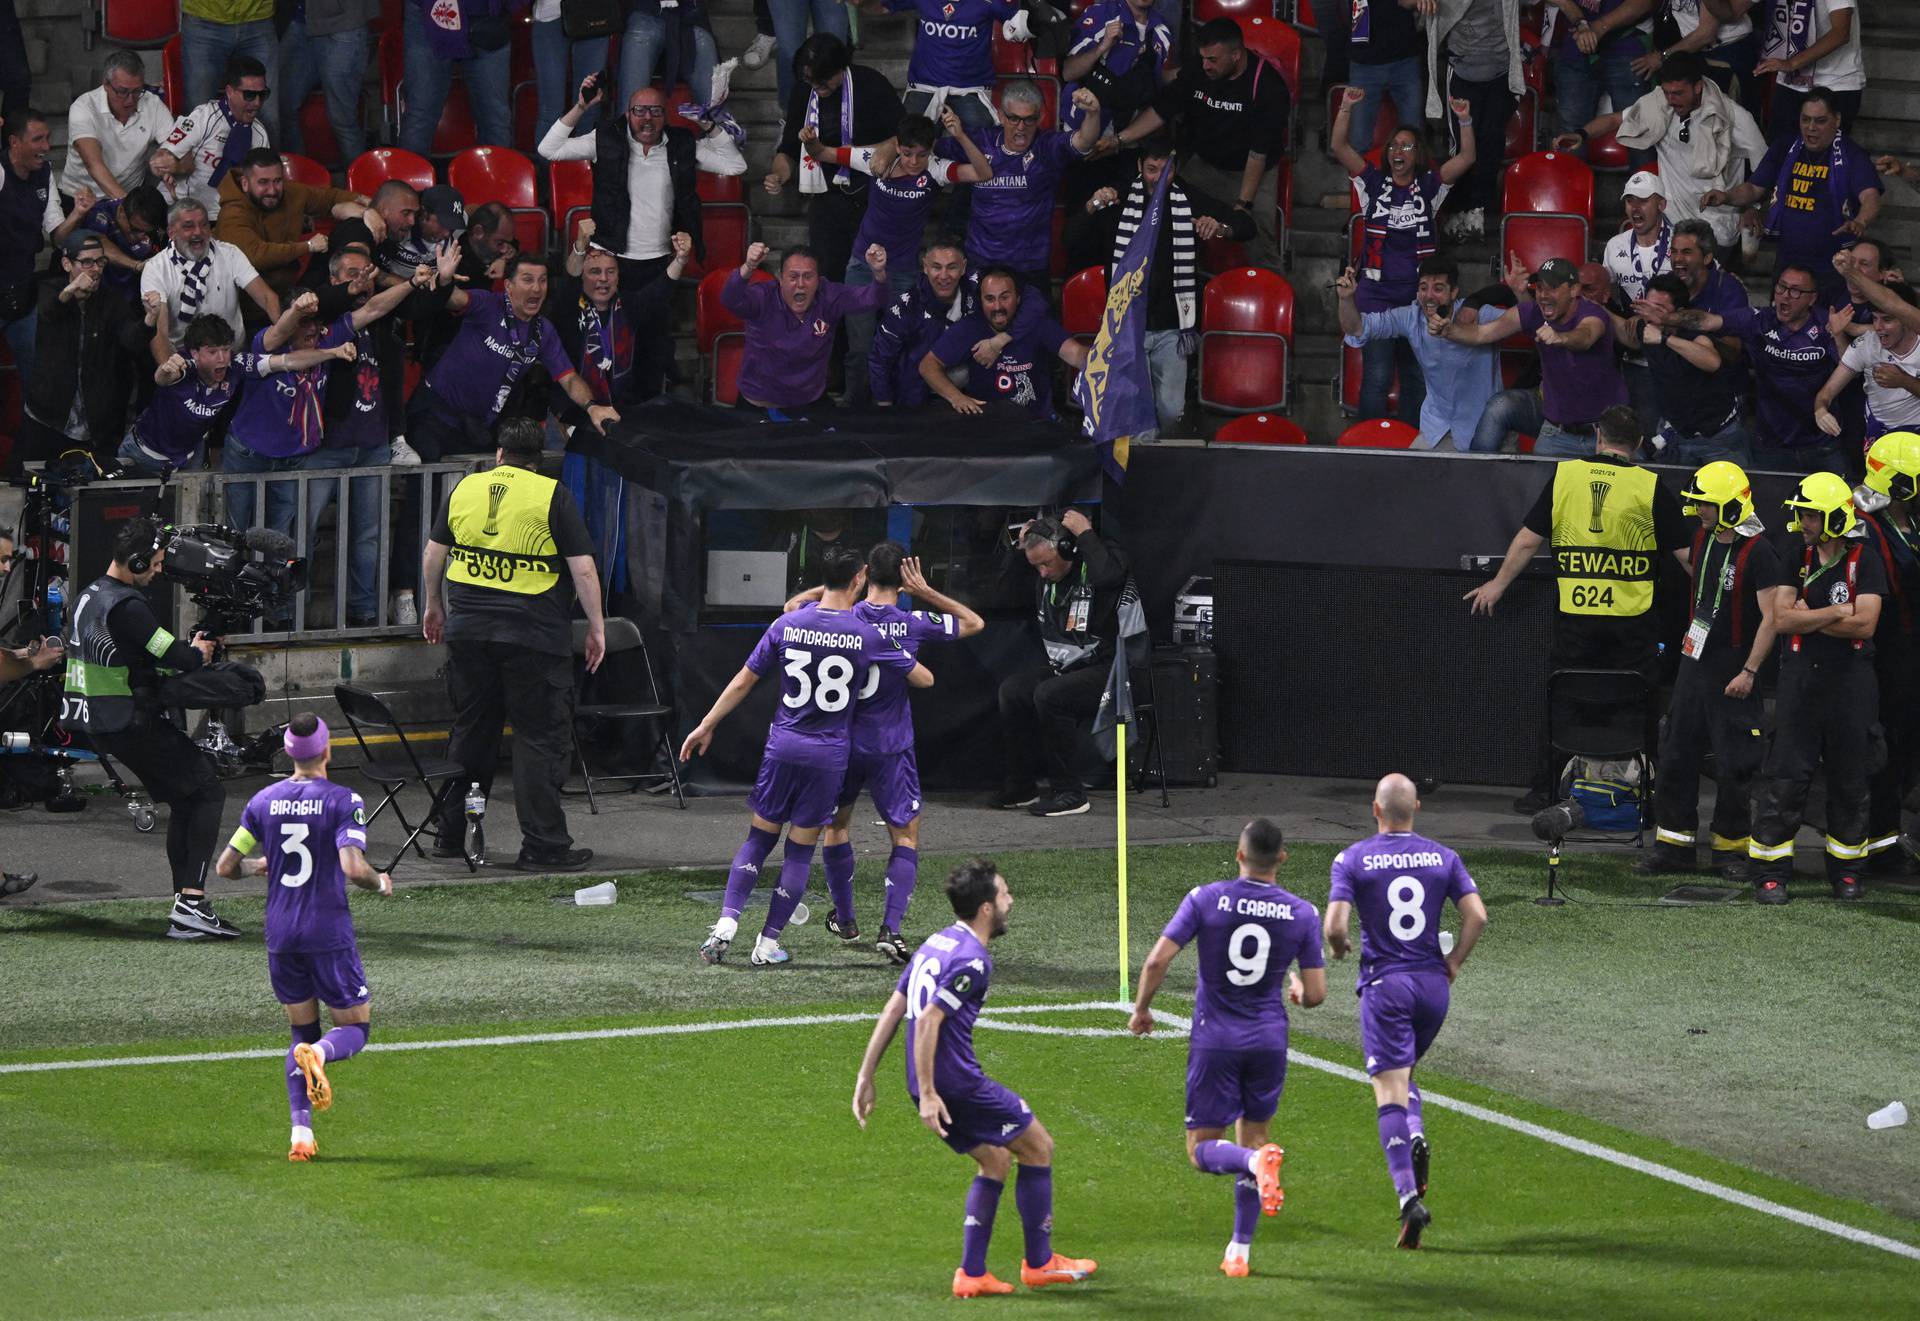 Europa Conference League - Final - Fiorentina v West Ham United